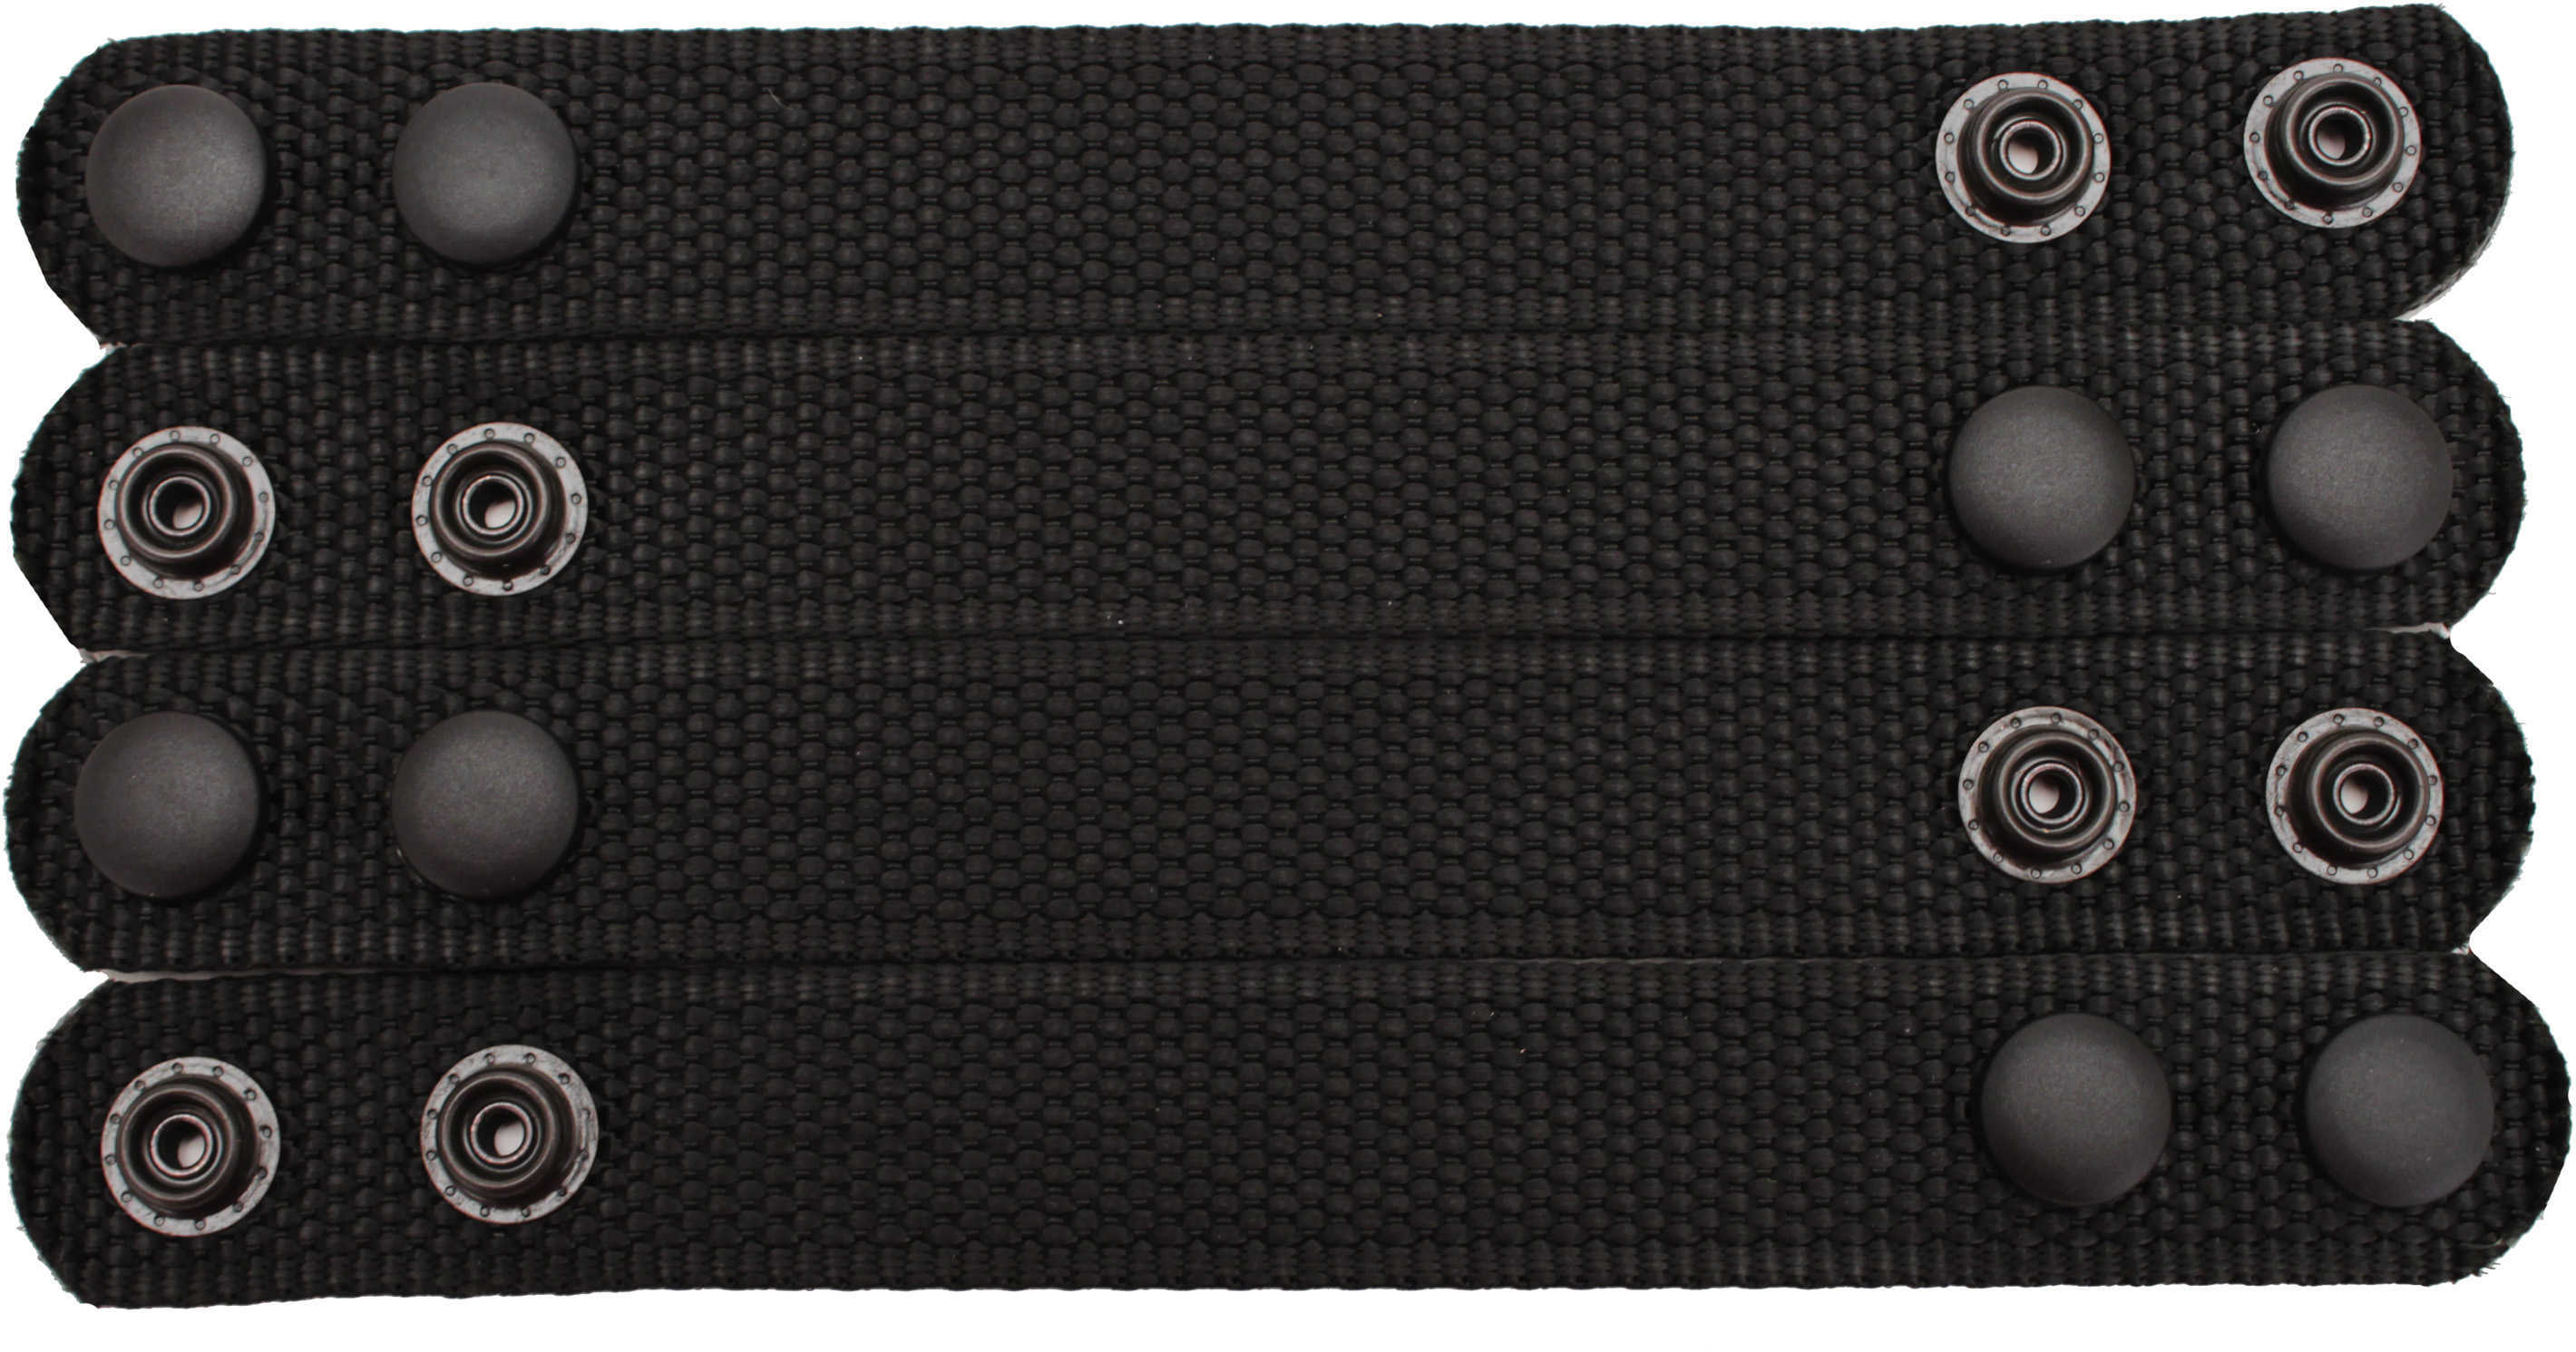 Bianchi 6406 Ranger Belt Keepers (4 Pack) Black Velcro 15634-img-1